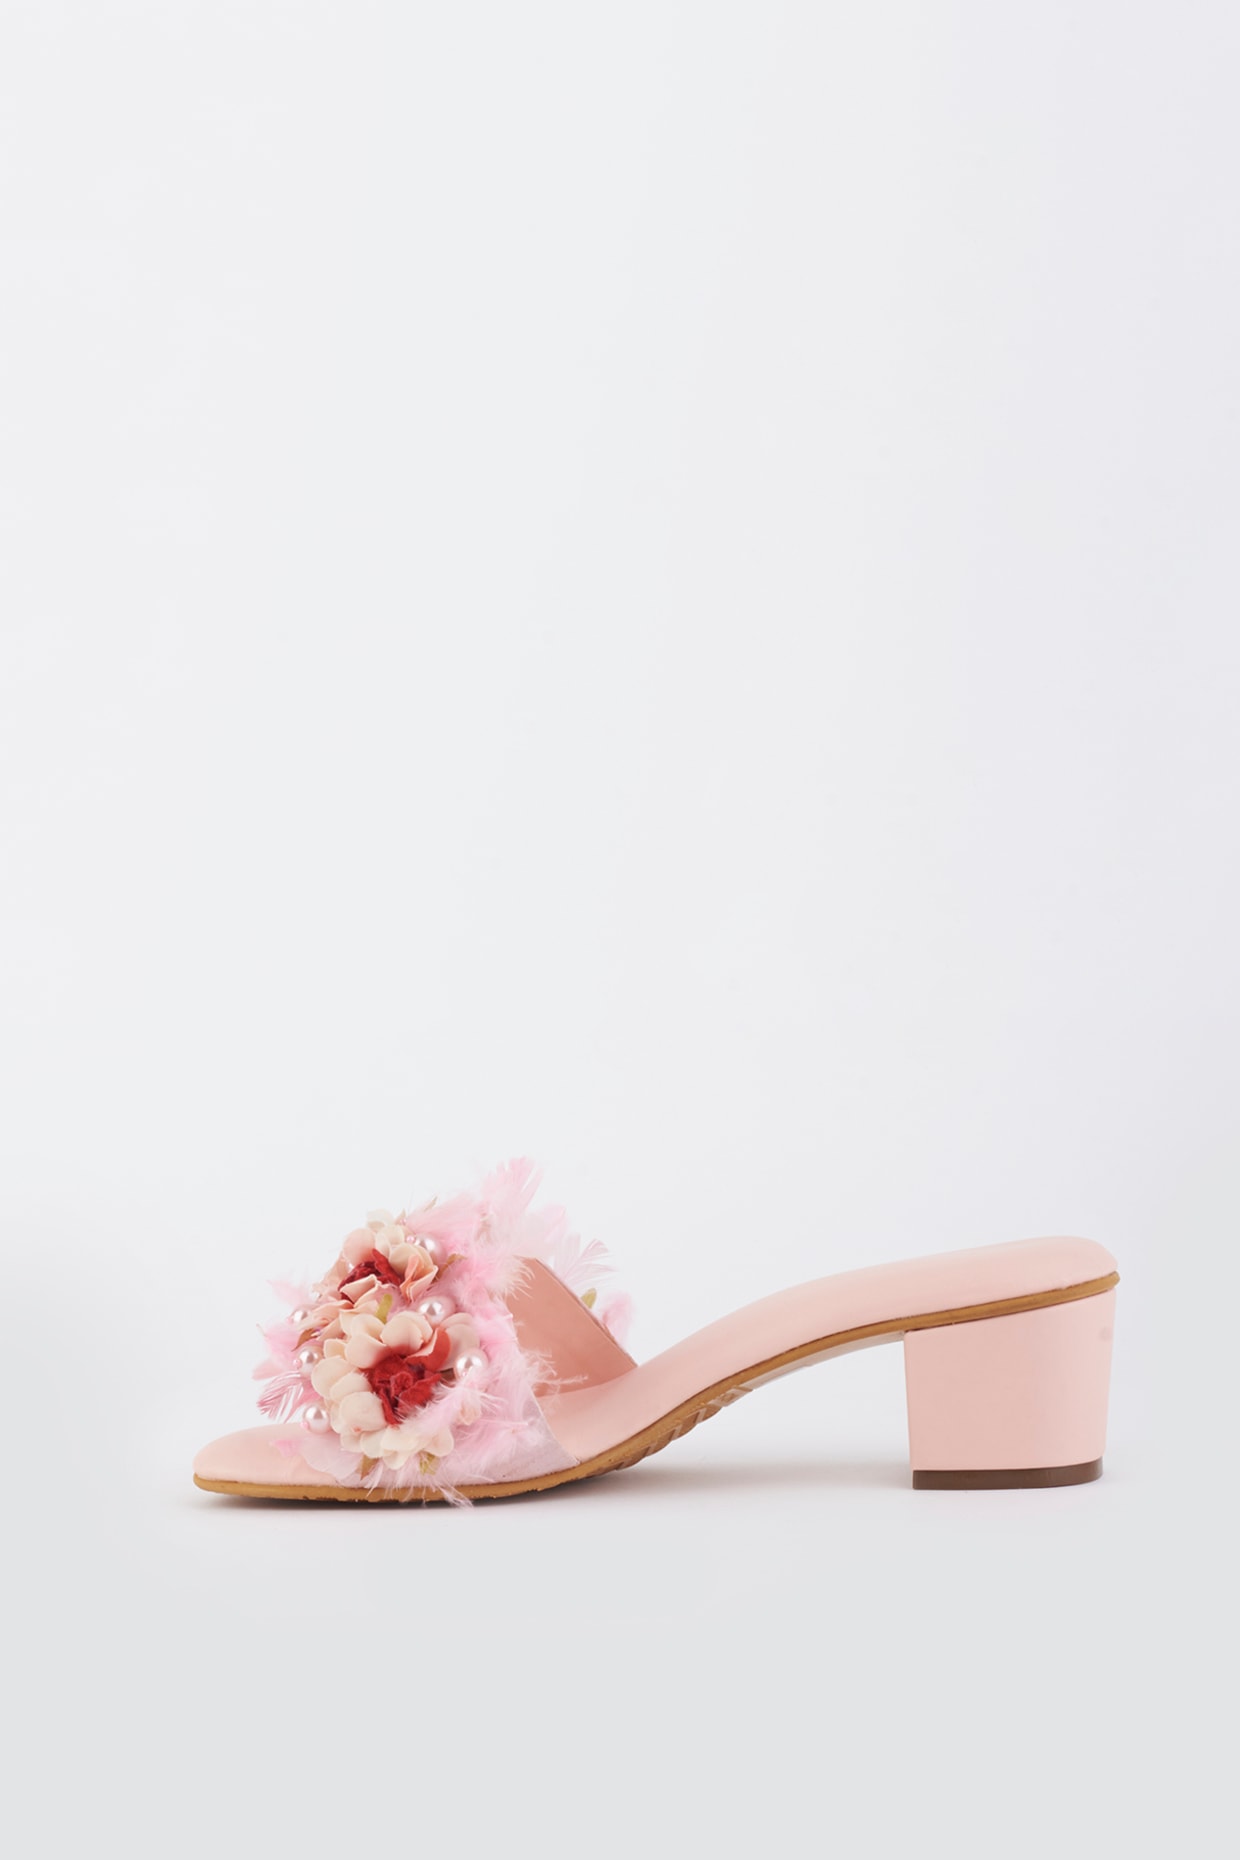 Perphy Women's Floral Platform Heel Slingback Chunky High Heels Sandals -  Walmart.com